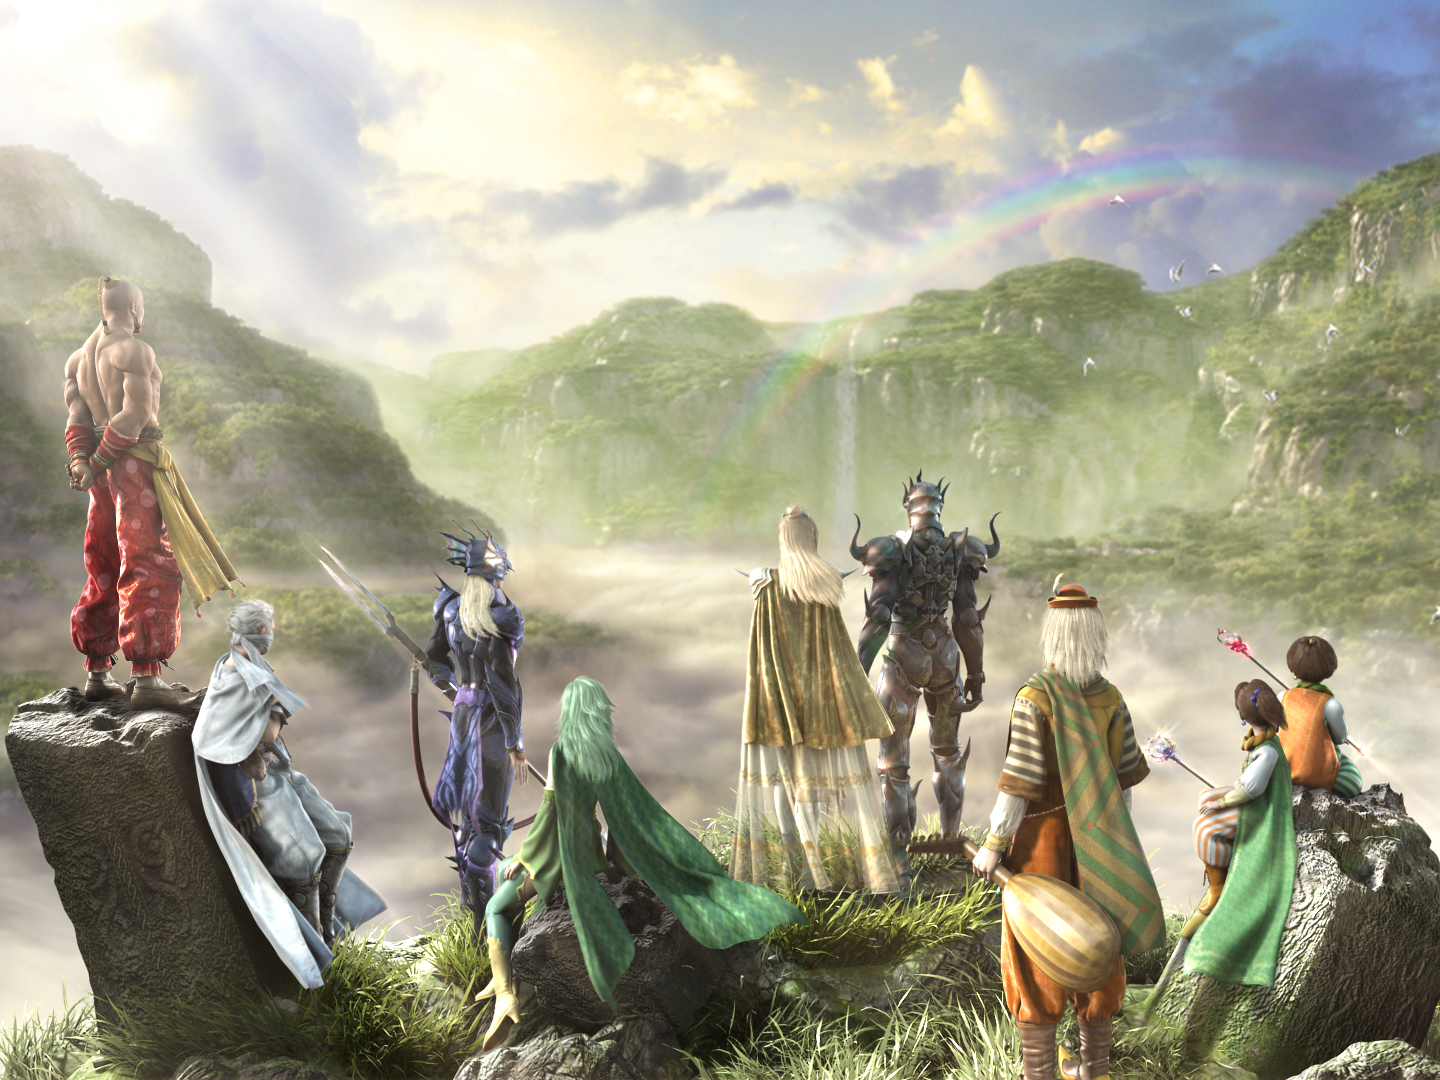 Final Fantasy Iv Final Fantasy Wiki Fandom